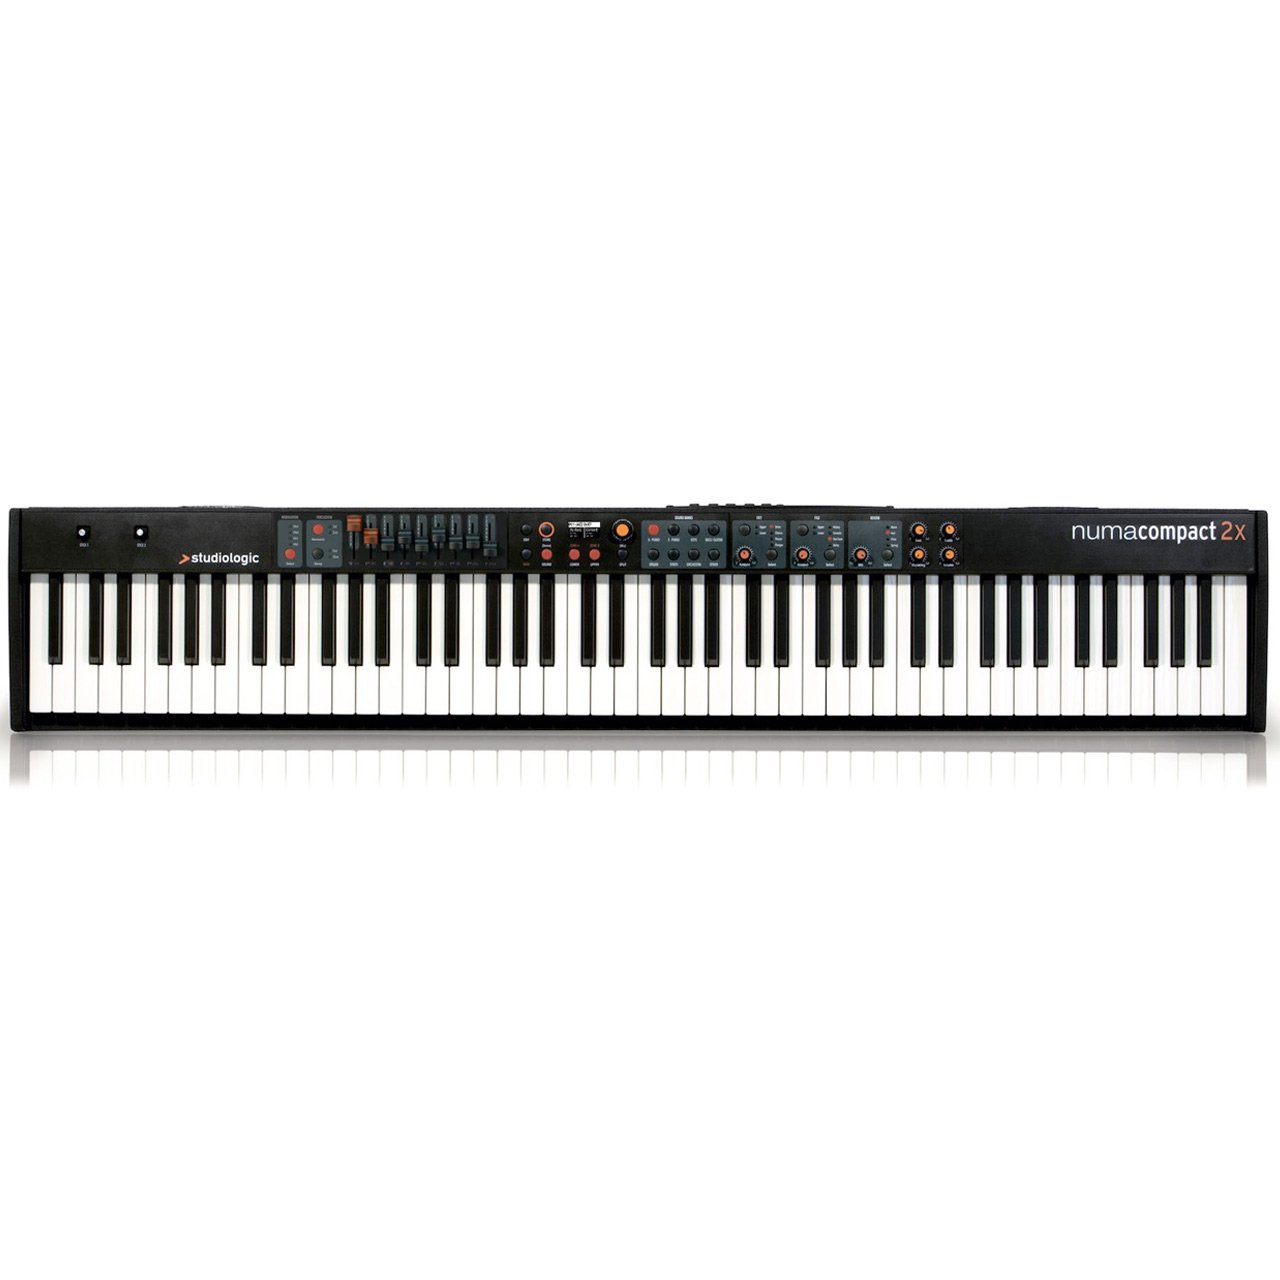 Digital Pianos - Studio Logic Numacompact 2x - 88-Key Semi-Weighted Keyboard W/ Aftertouch